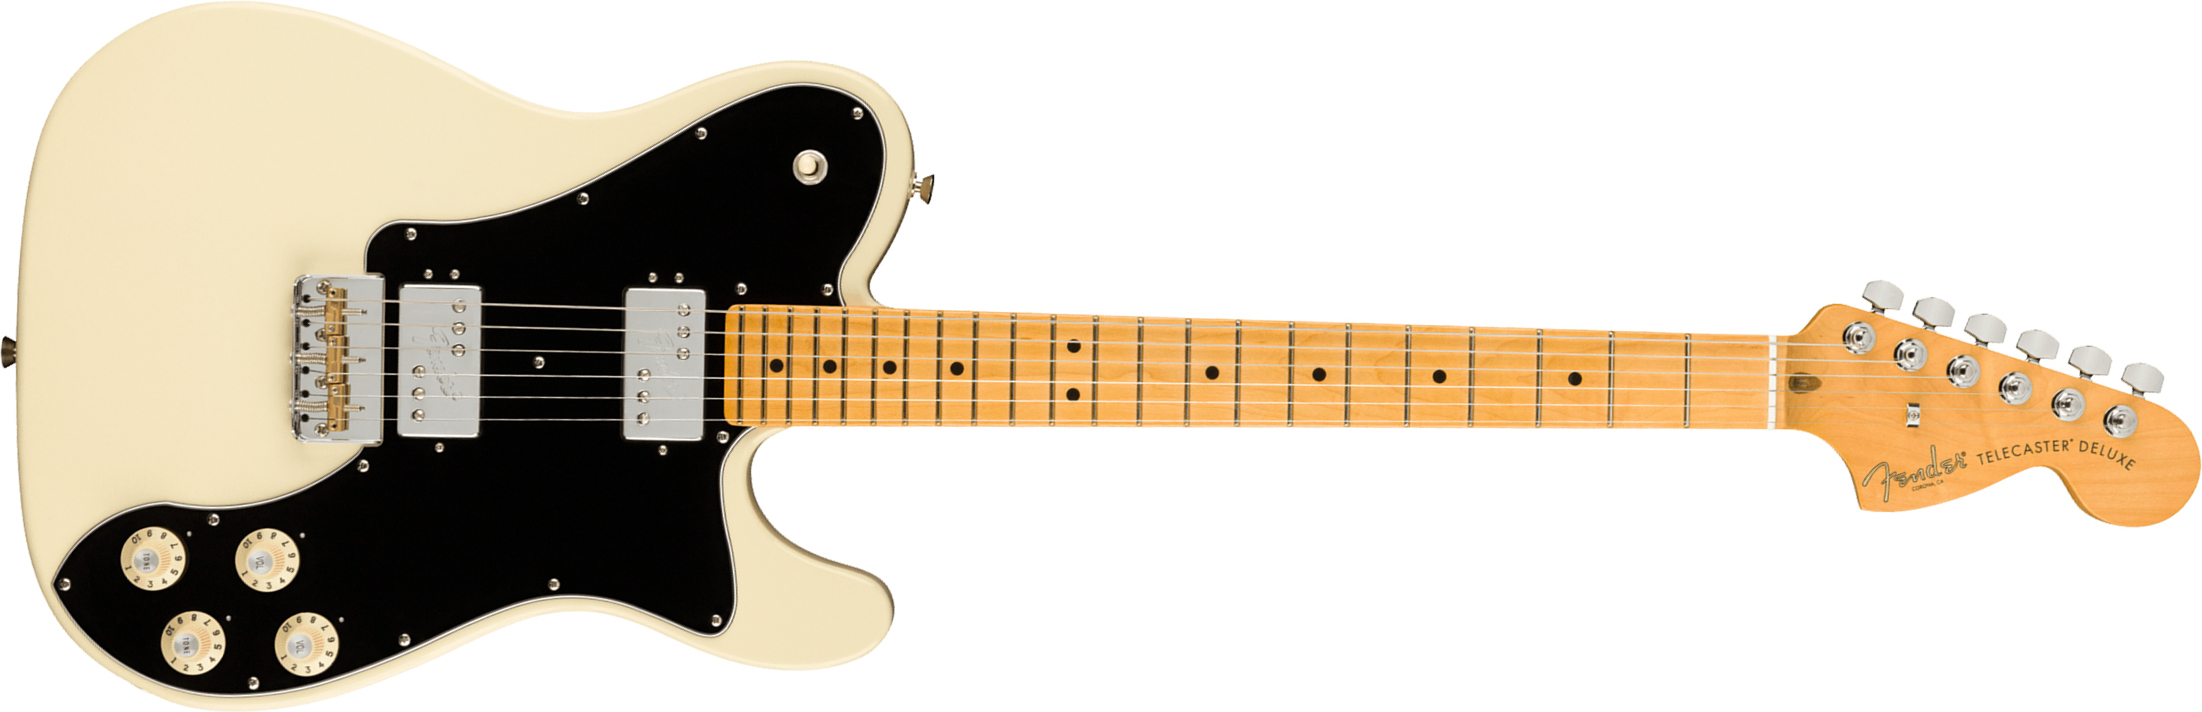 Fender Tele Deluxe American Professional Ii Usa Mn - Olympic White - Guitarra eléctrica con forma de tel - Main picture